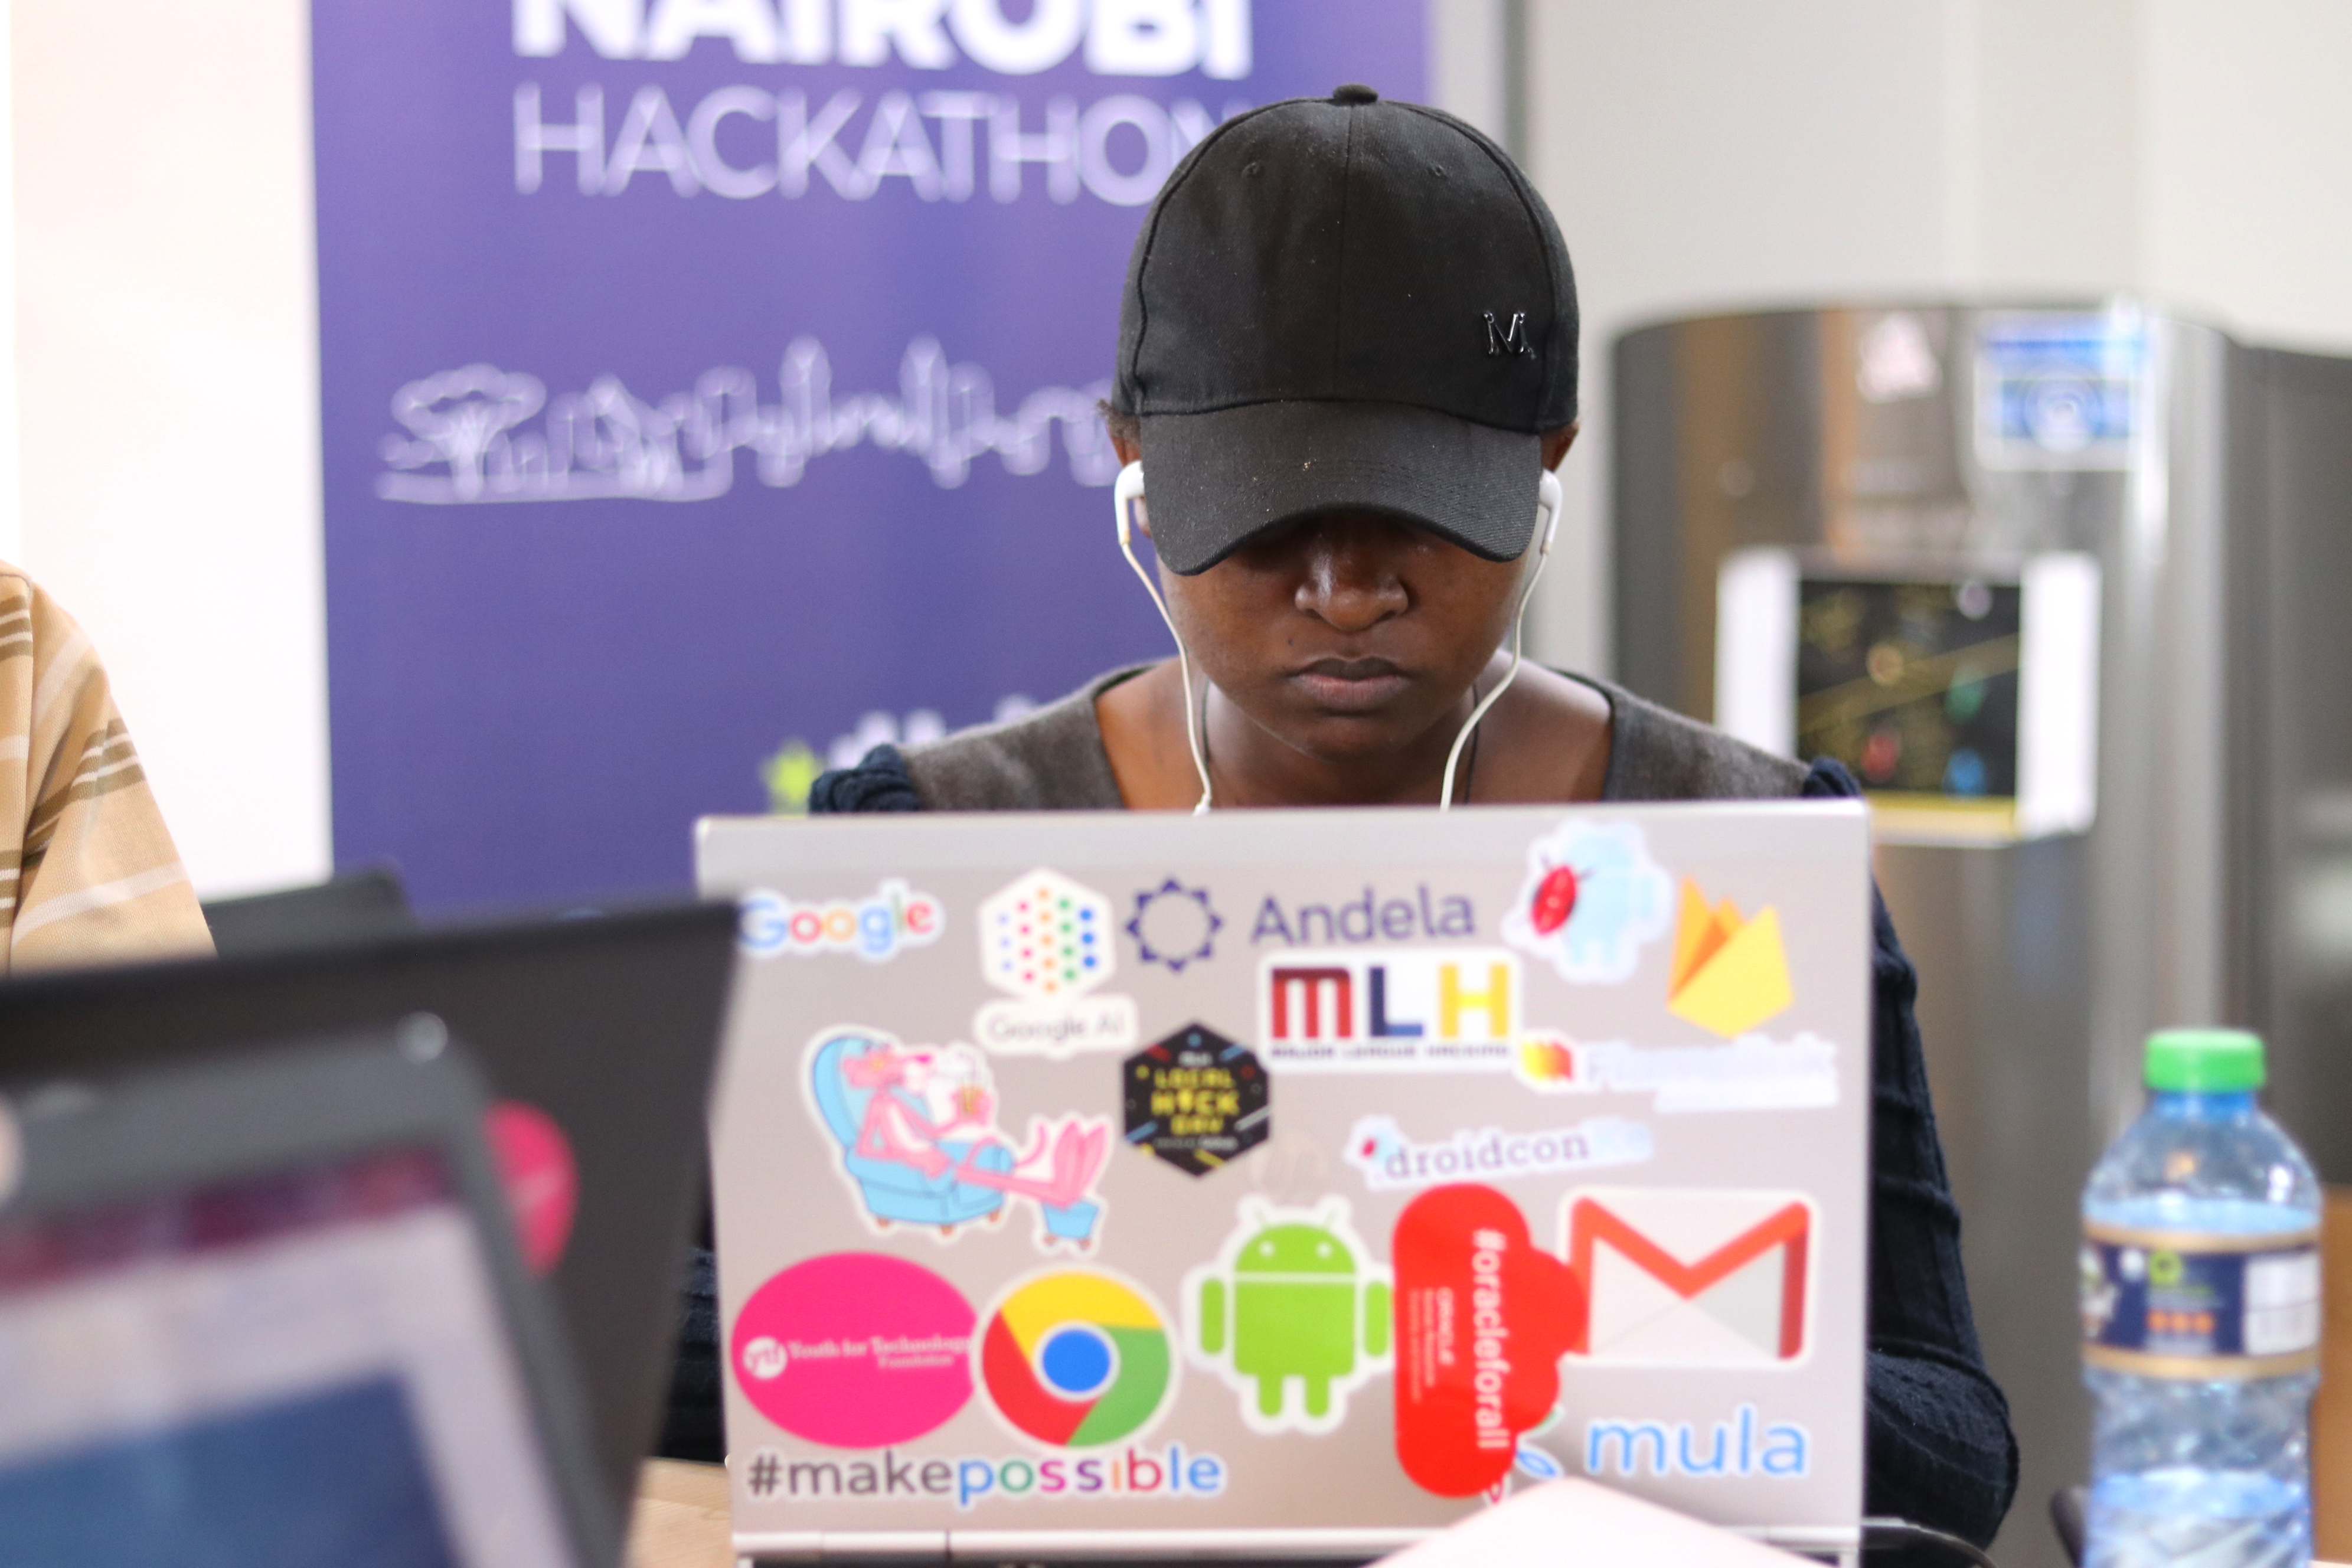 Techfugees worker sat at laptop